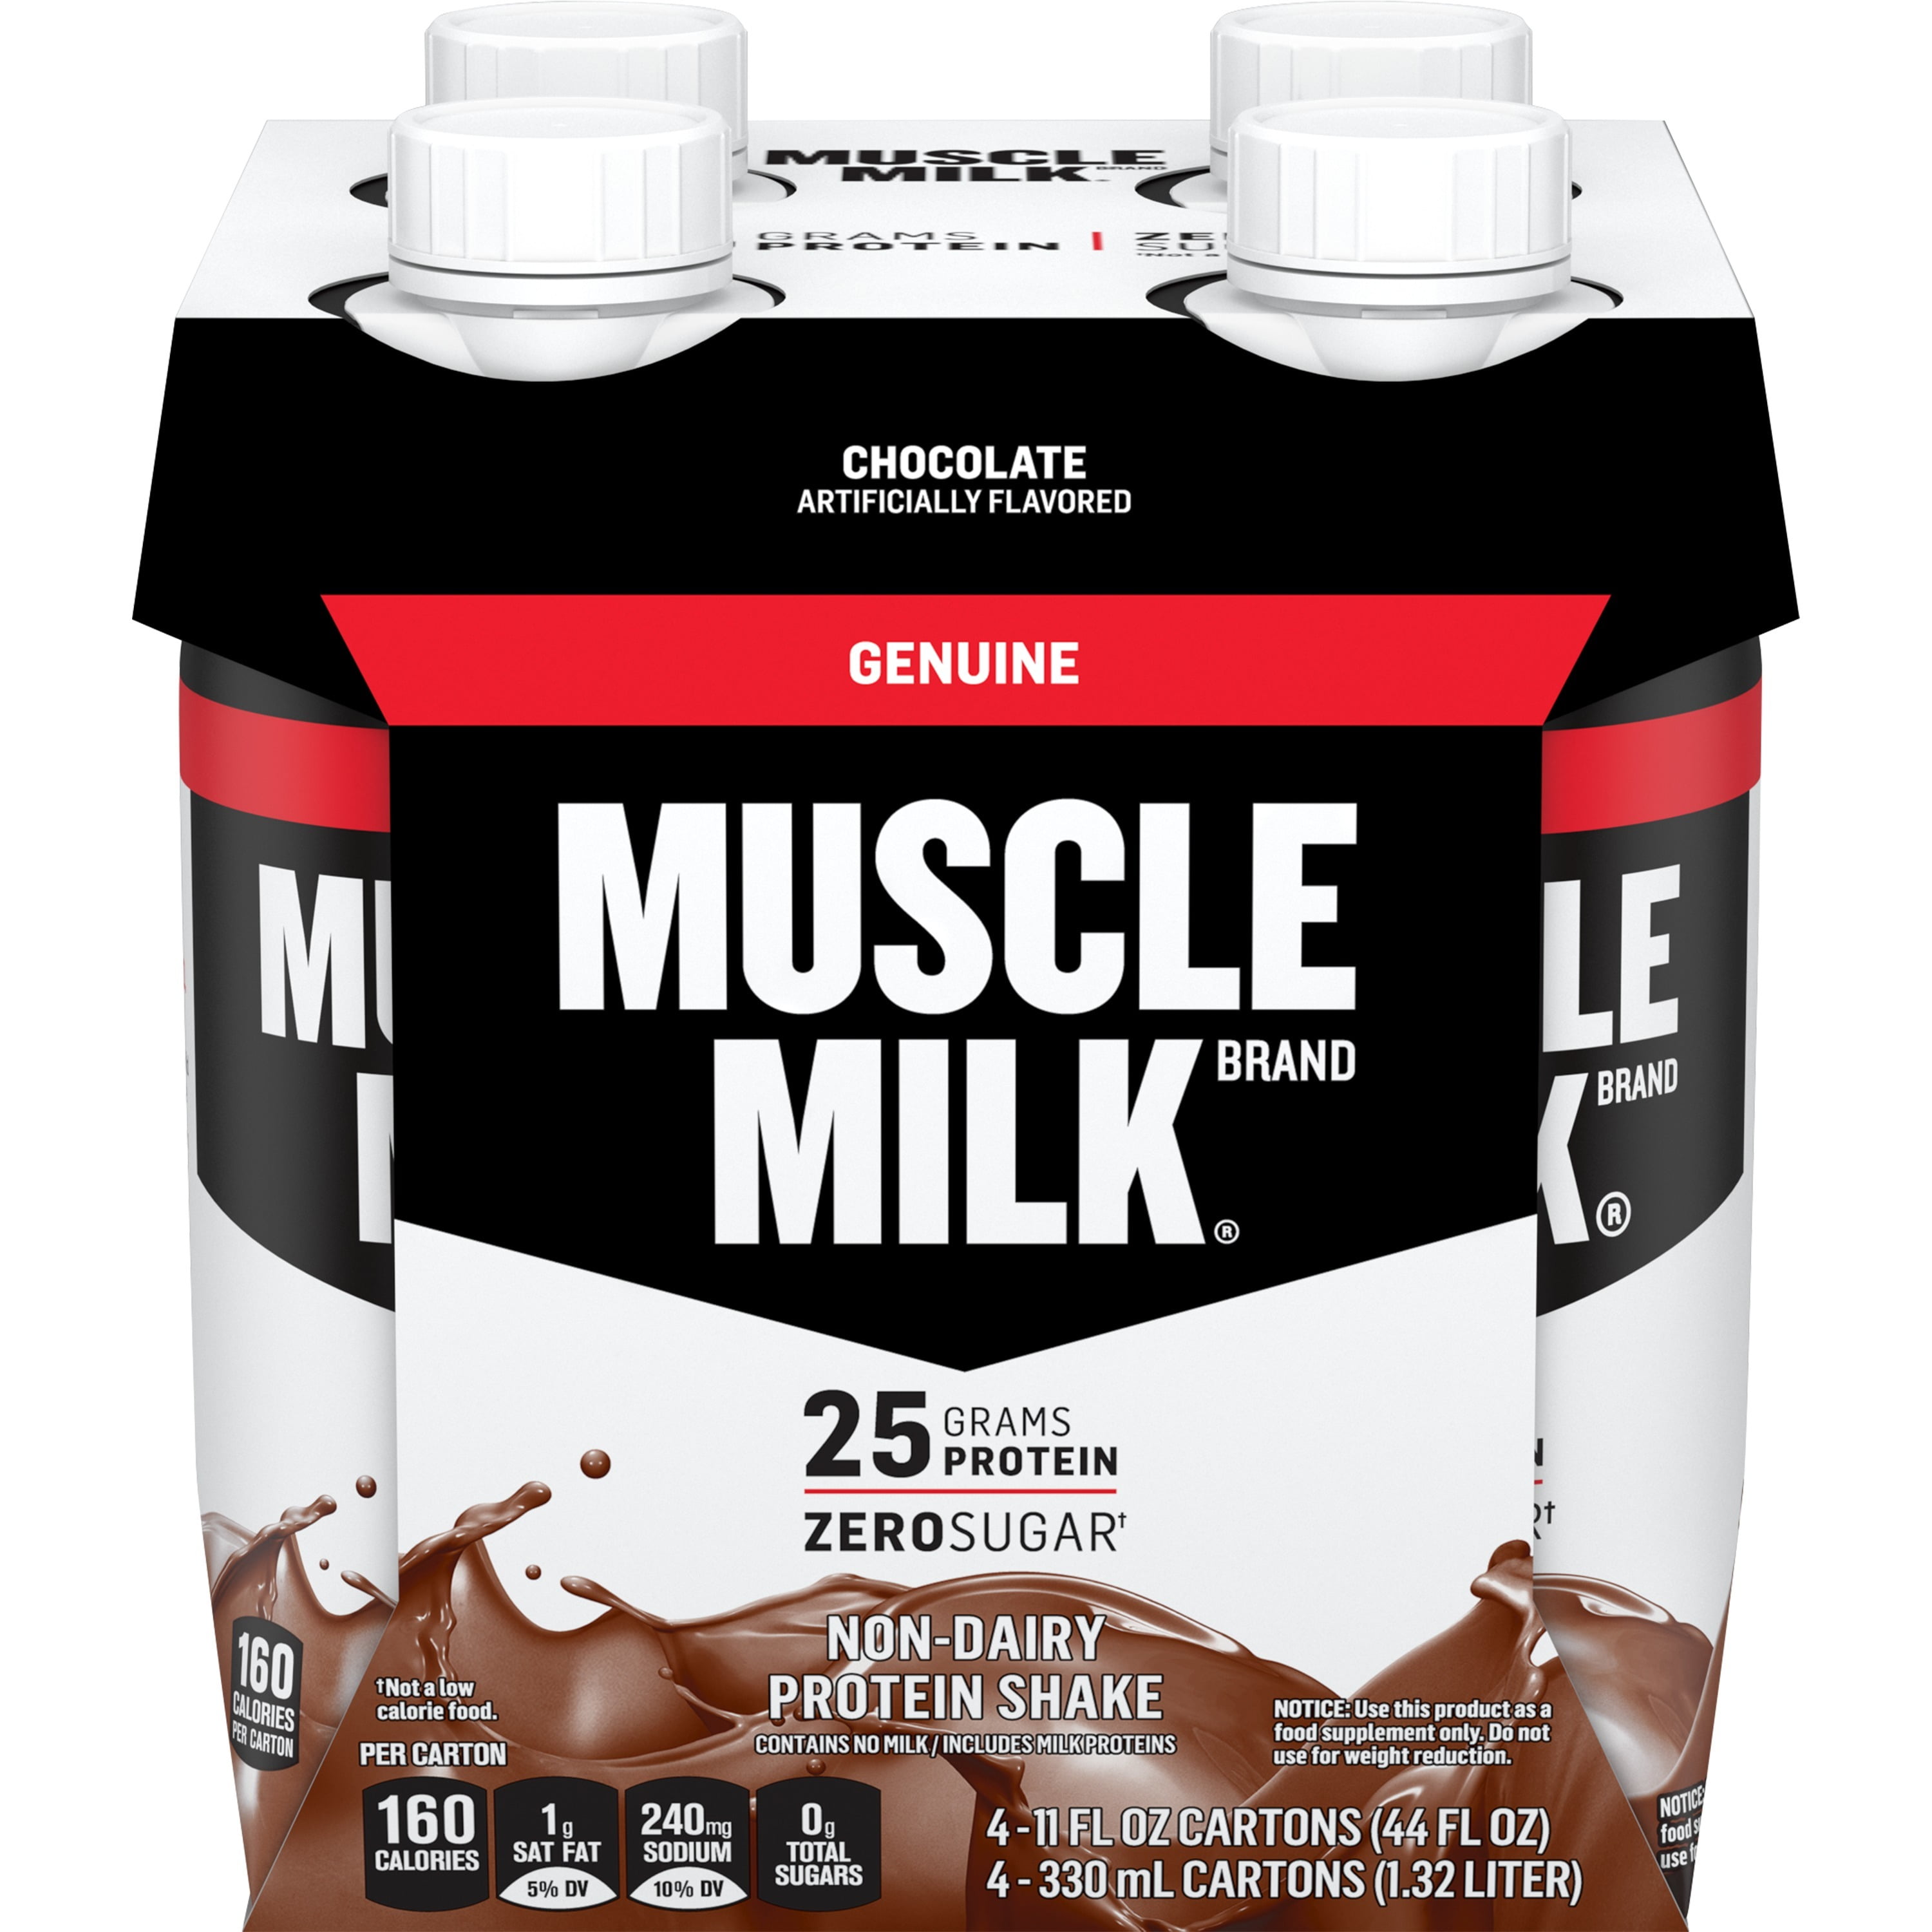 Muscle Milk Genuine Protein Shake, 25g Protein, Strawberries 'N Creme, 11 Fl Oz, 4 Count - Walmart.com